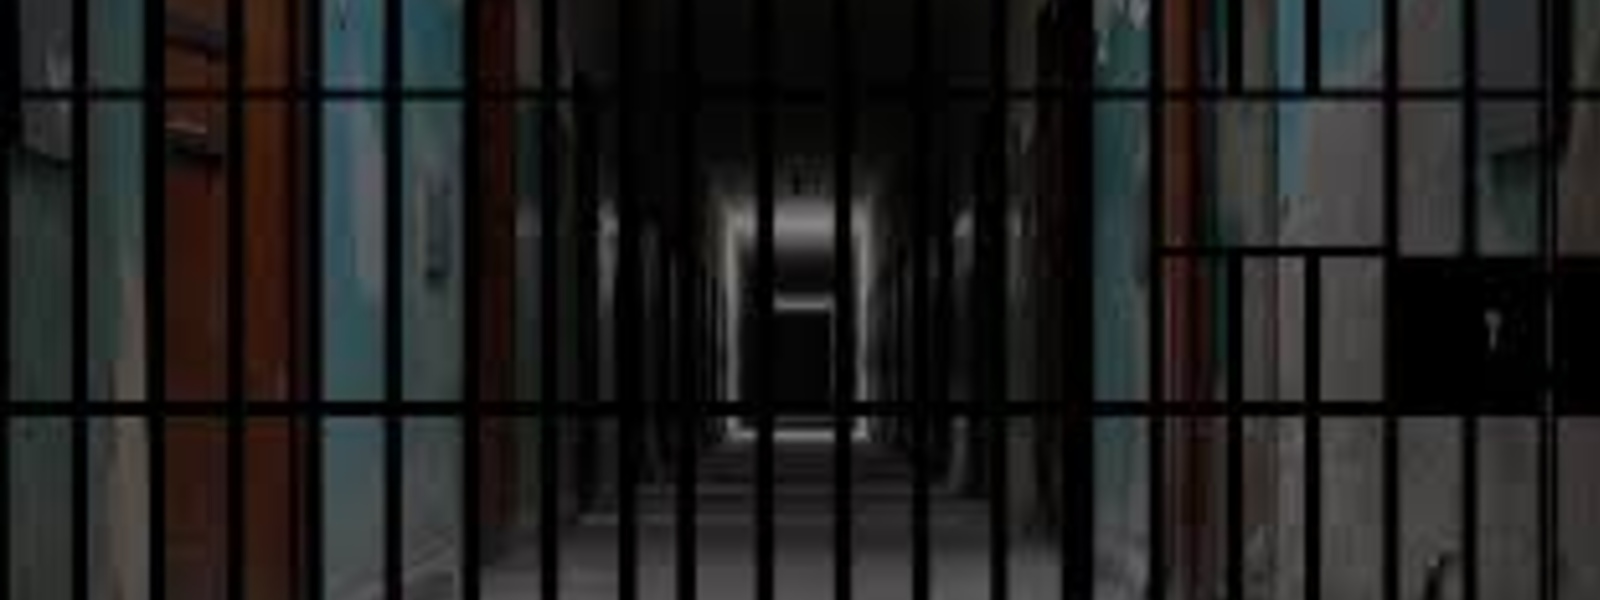 Mahara Prison Unrest : 01 Prisoner dead & 03 Injured, STF on site to tighten security